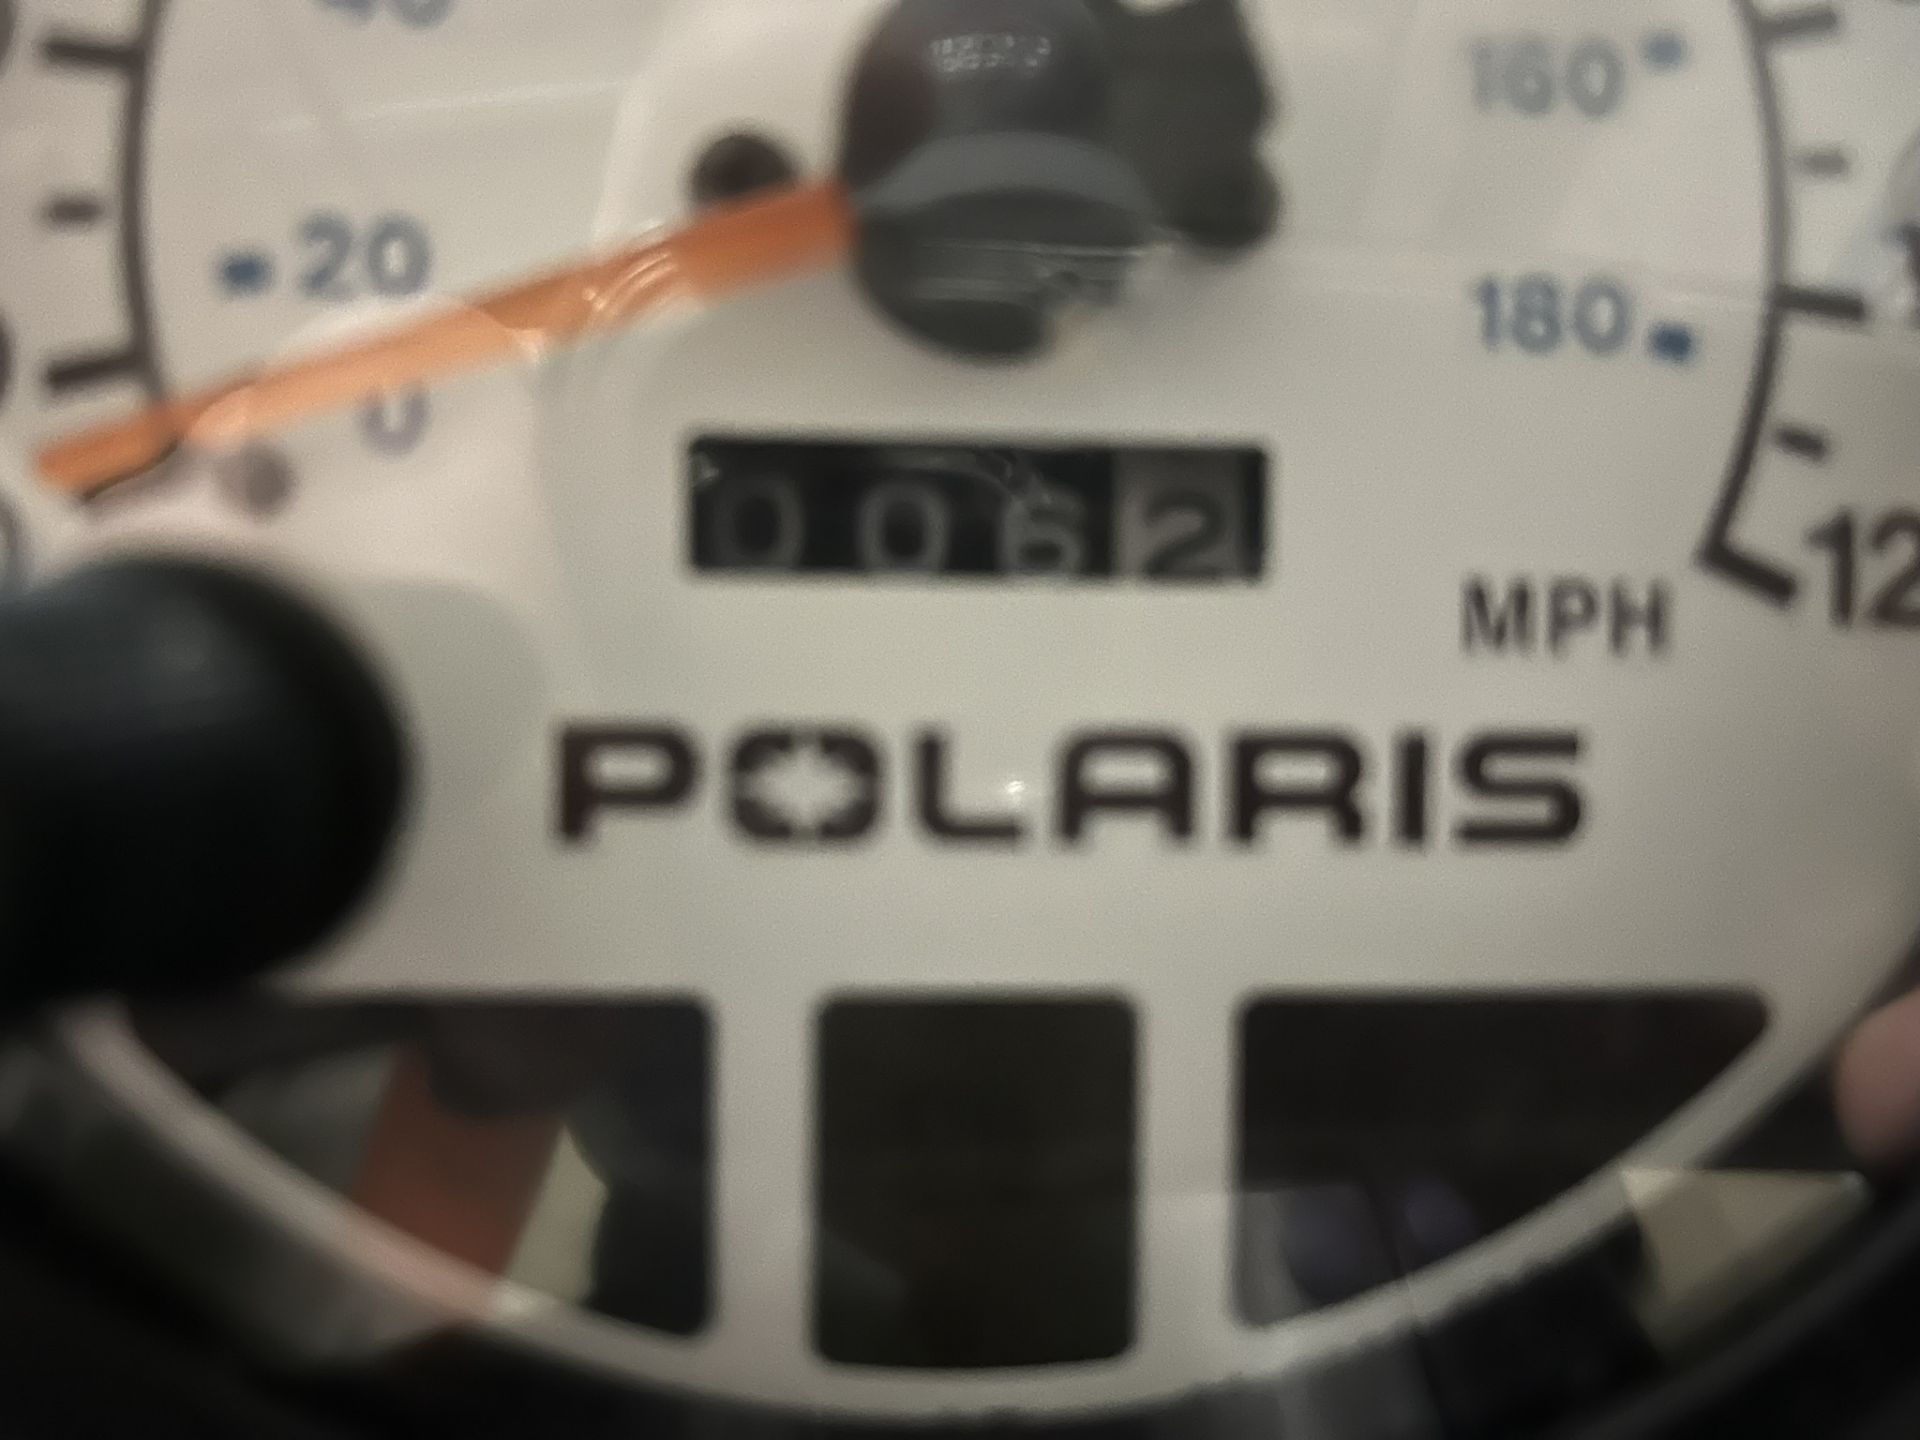 2000 POLARIS XC500 SNOWMOBILE MODEL # S01NP5CSR - Image 4 of 4